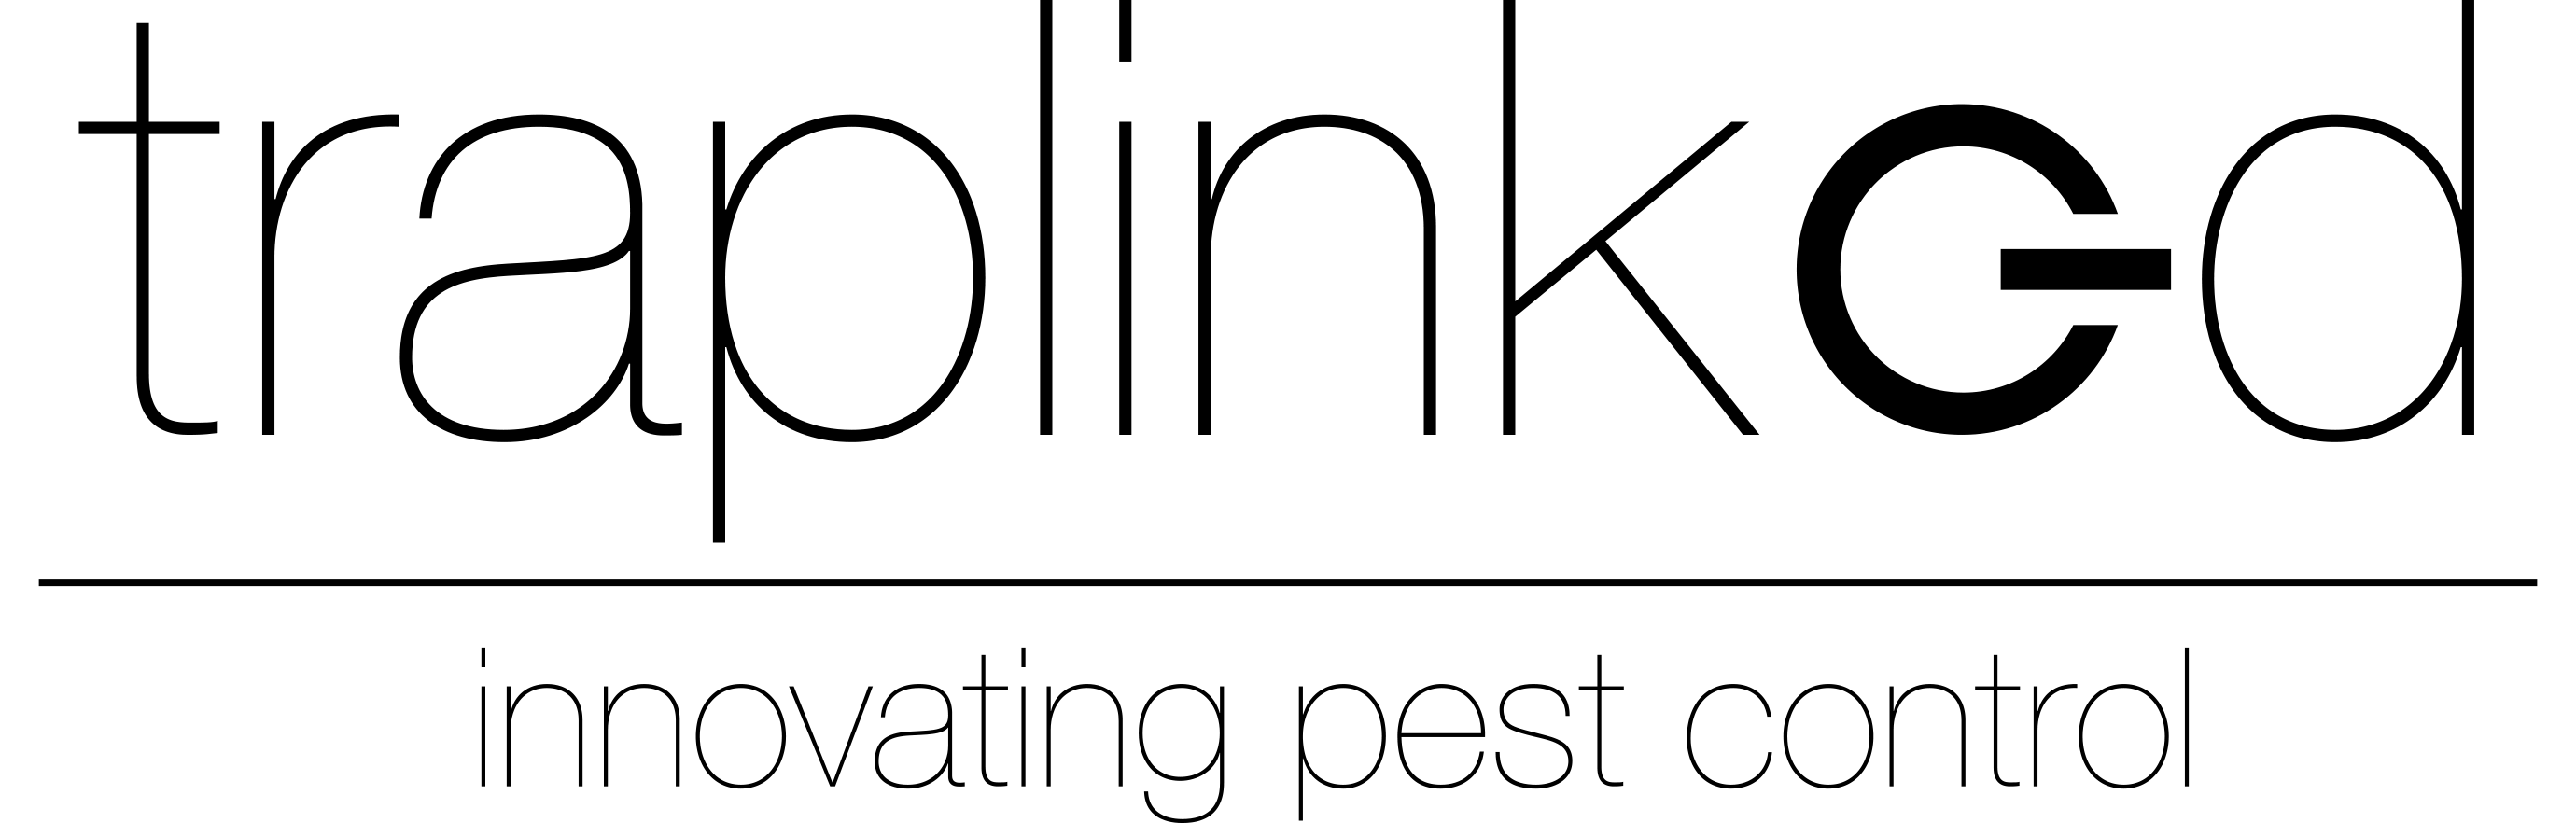 Traplinked_Transparent logo